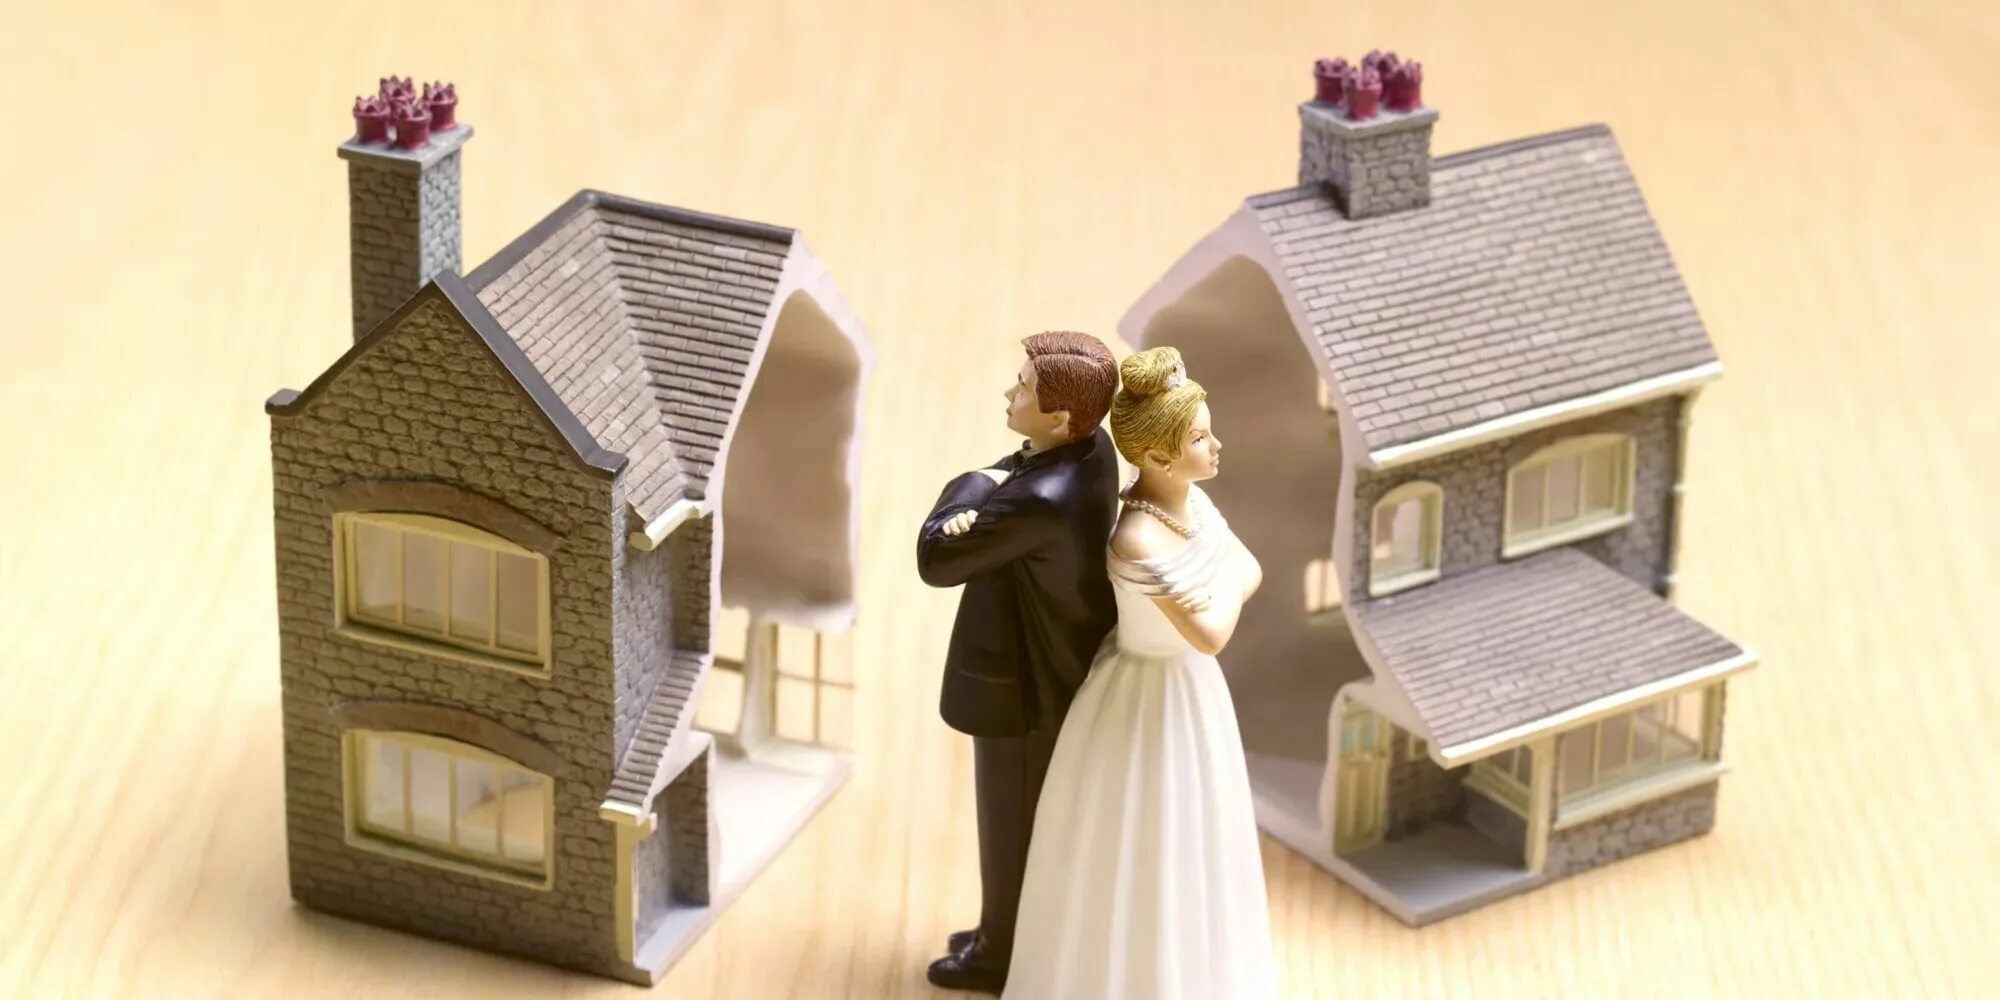 Ипотечное имущество при разводе. Развод и Разделение имущества. Раздел квартиры при разводе. Супруги имущество. Имущество в браке.